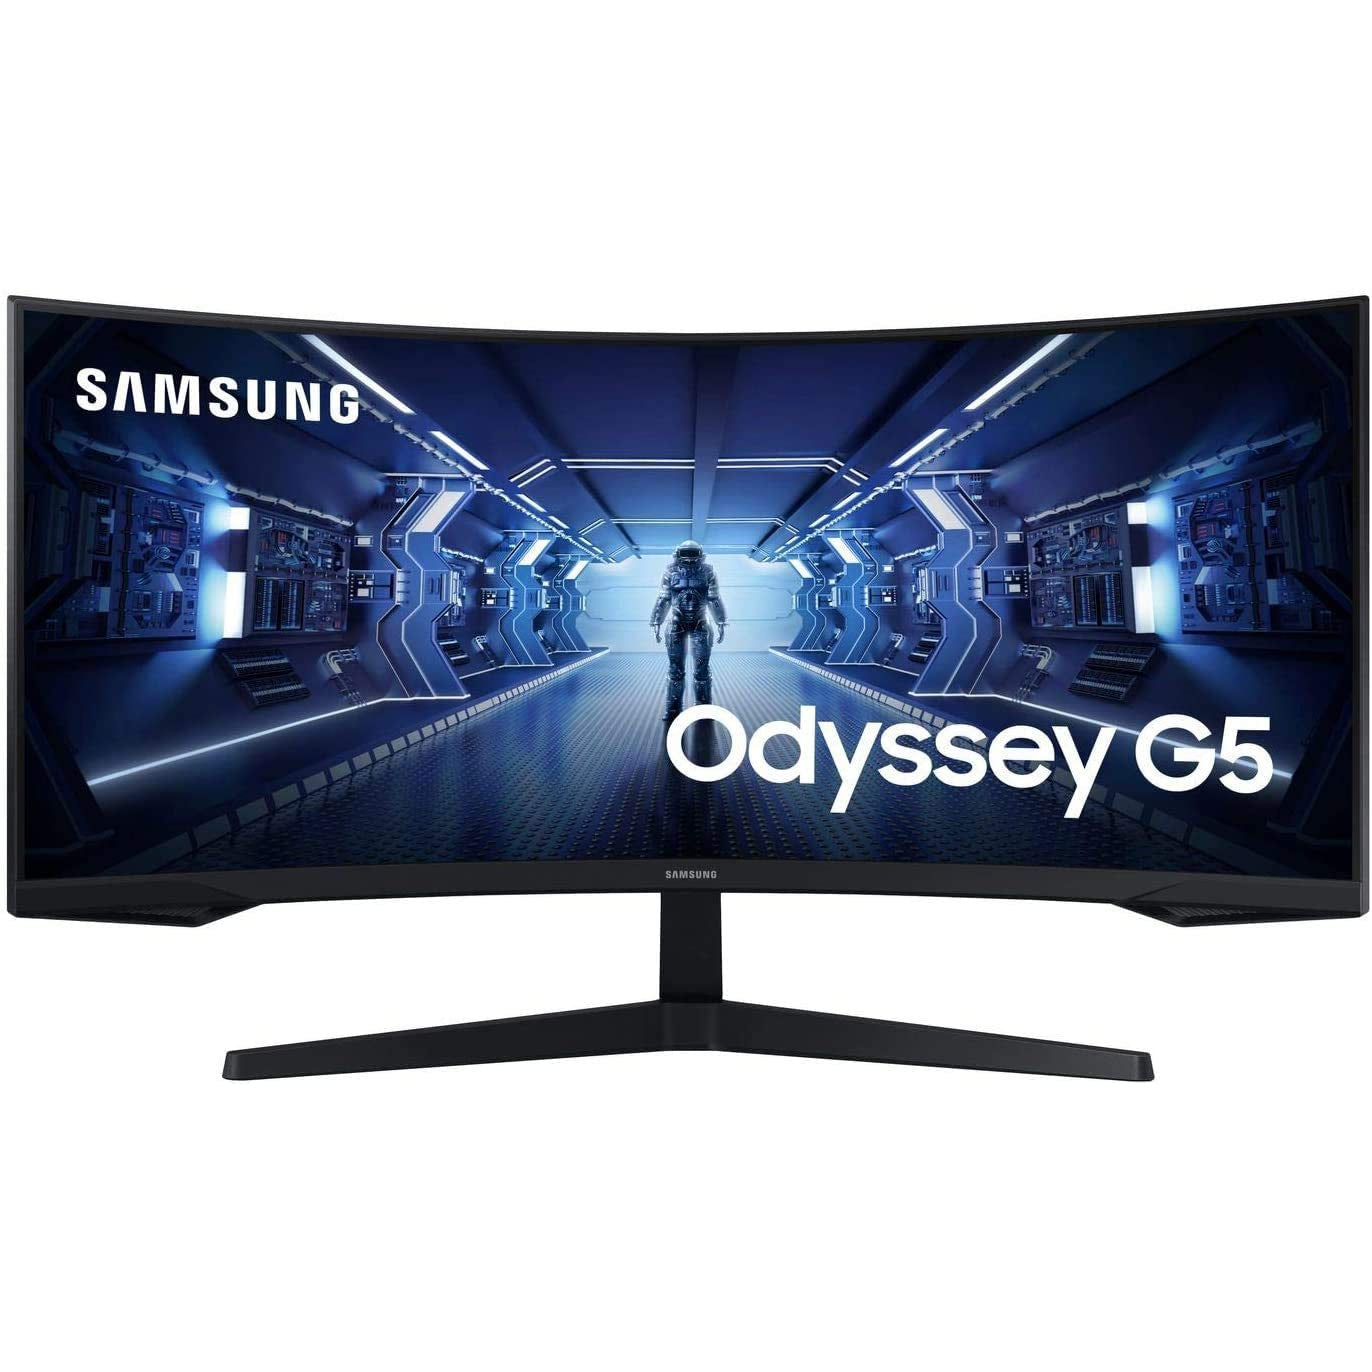 Samsung Odyssey G5 34'' LED Monitor (No Stand)